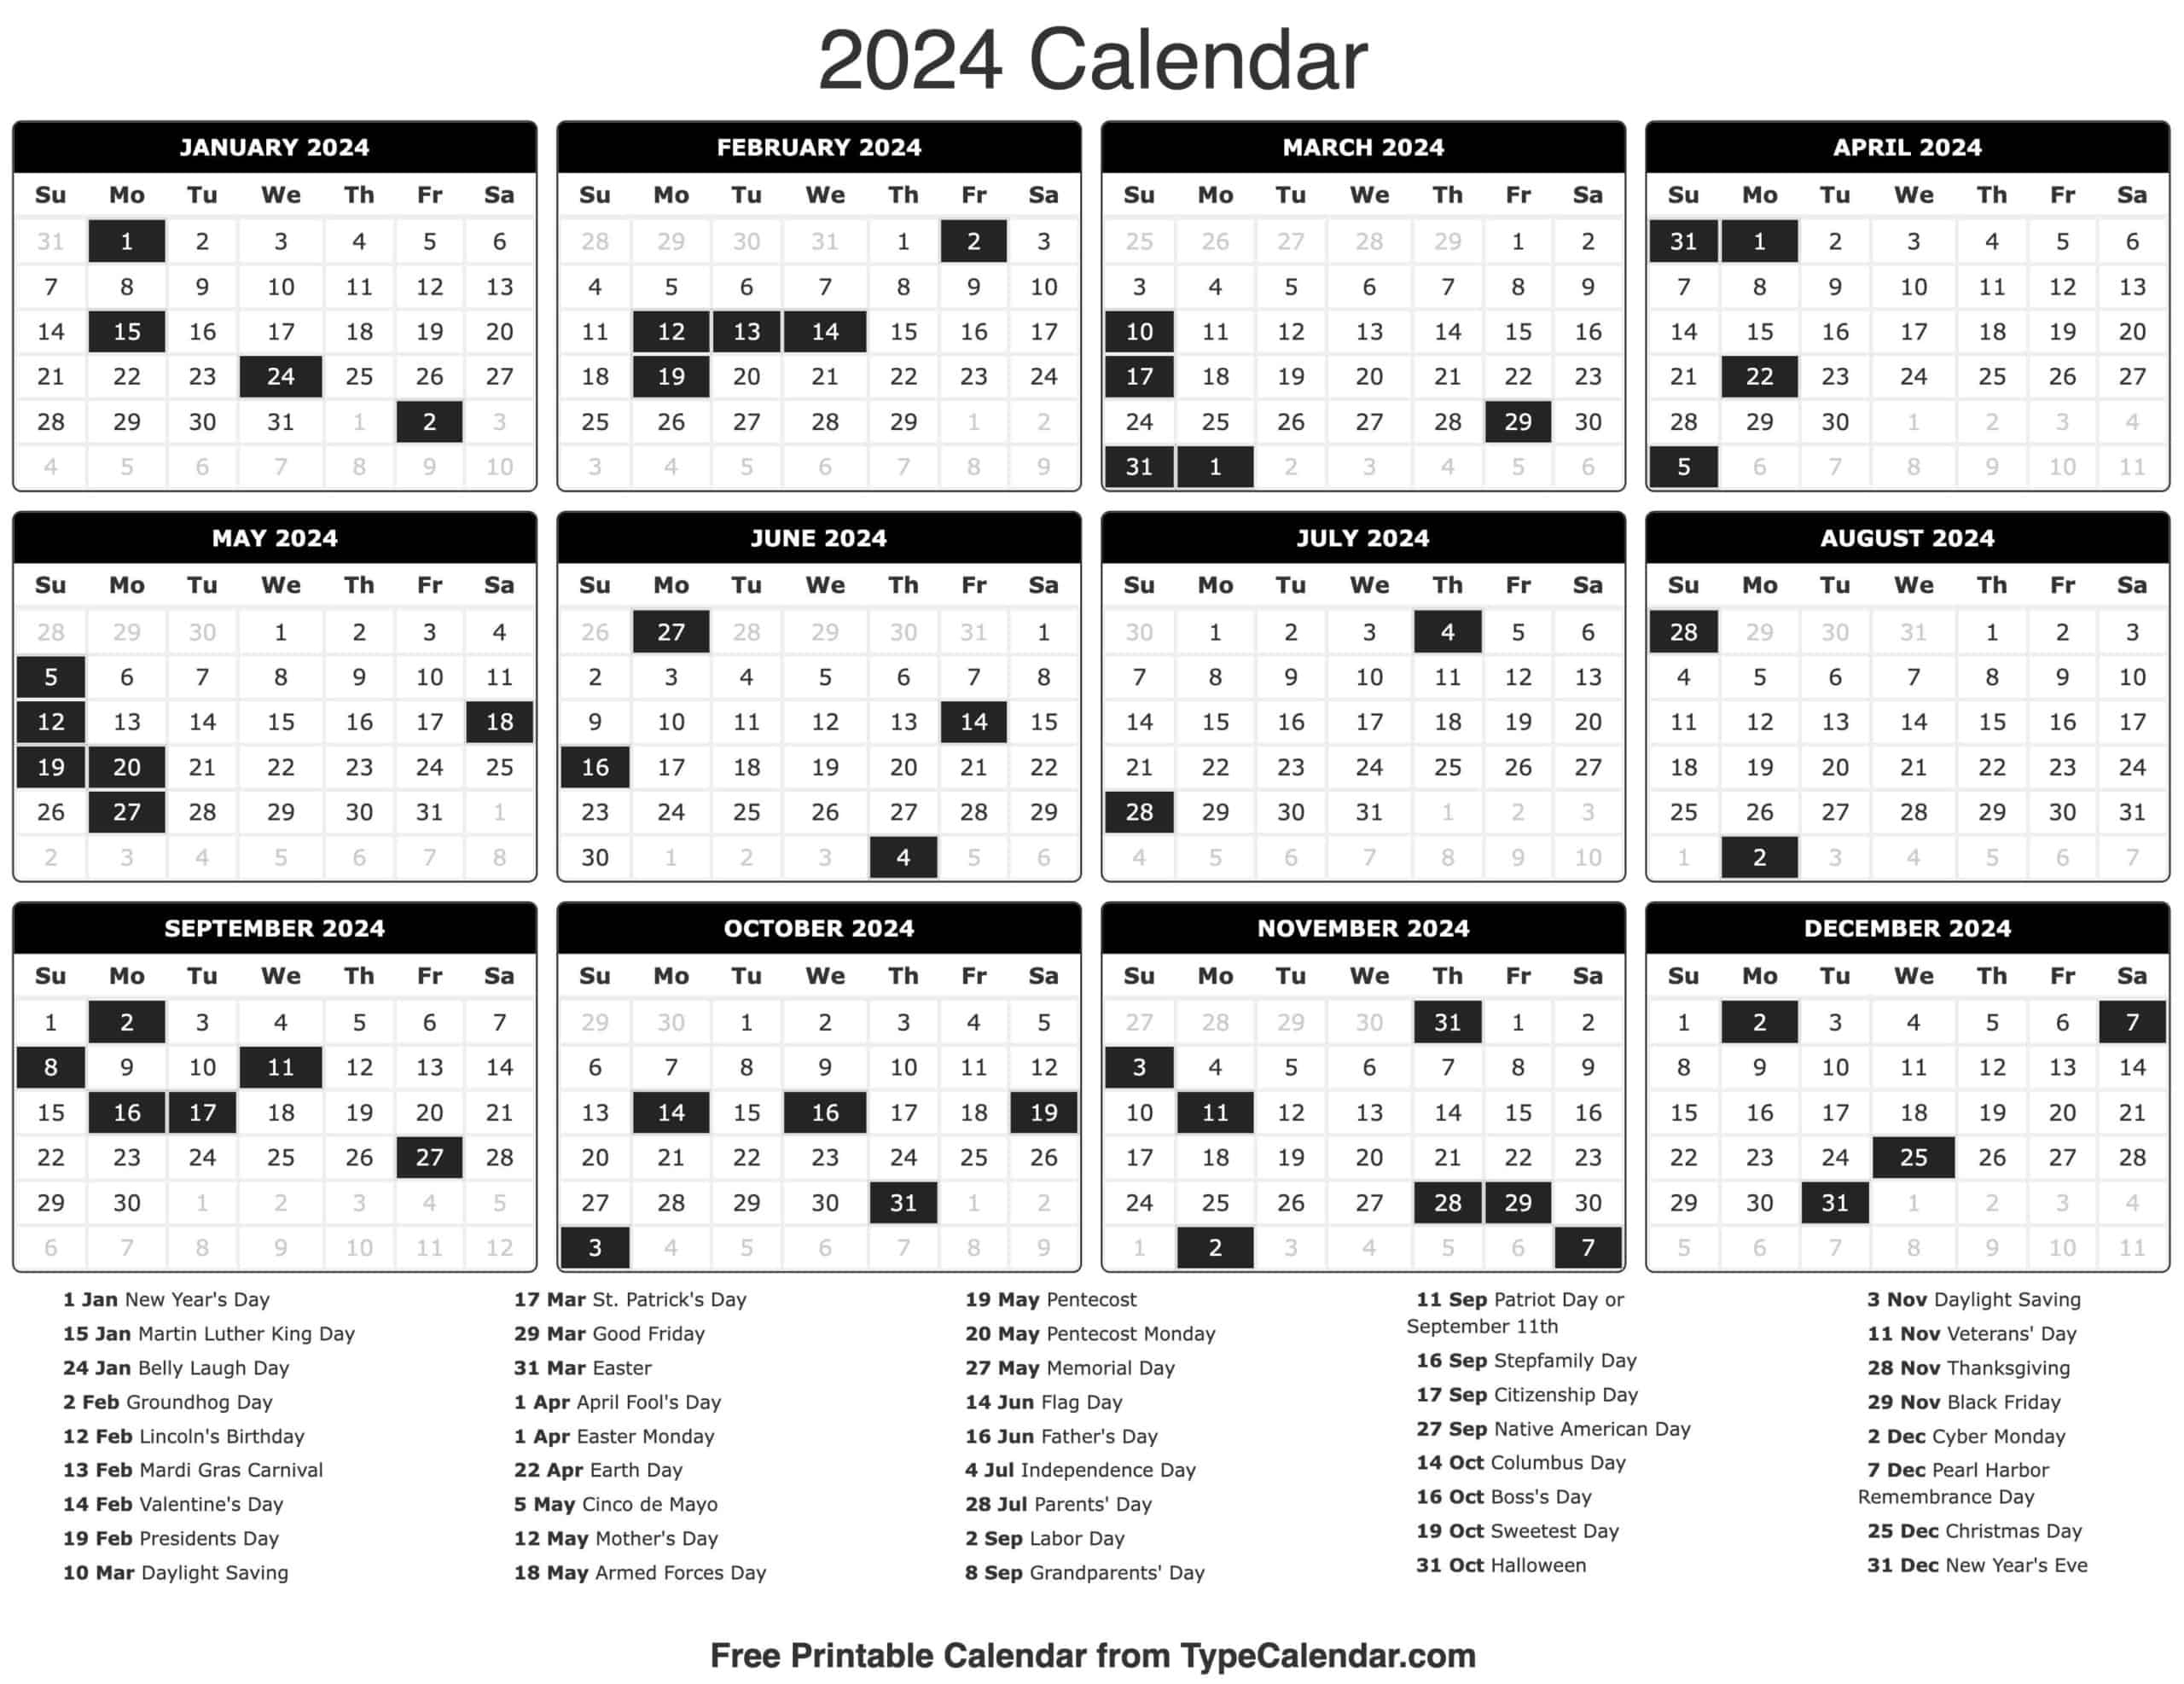 2024 Calendar: Free Printable Calendar With Holidays | 2024 Qld Calendar Printable Free